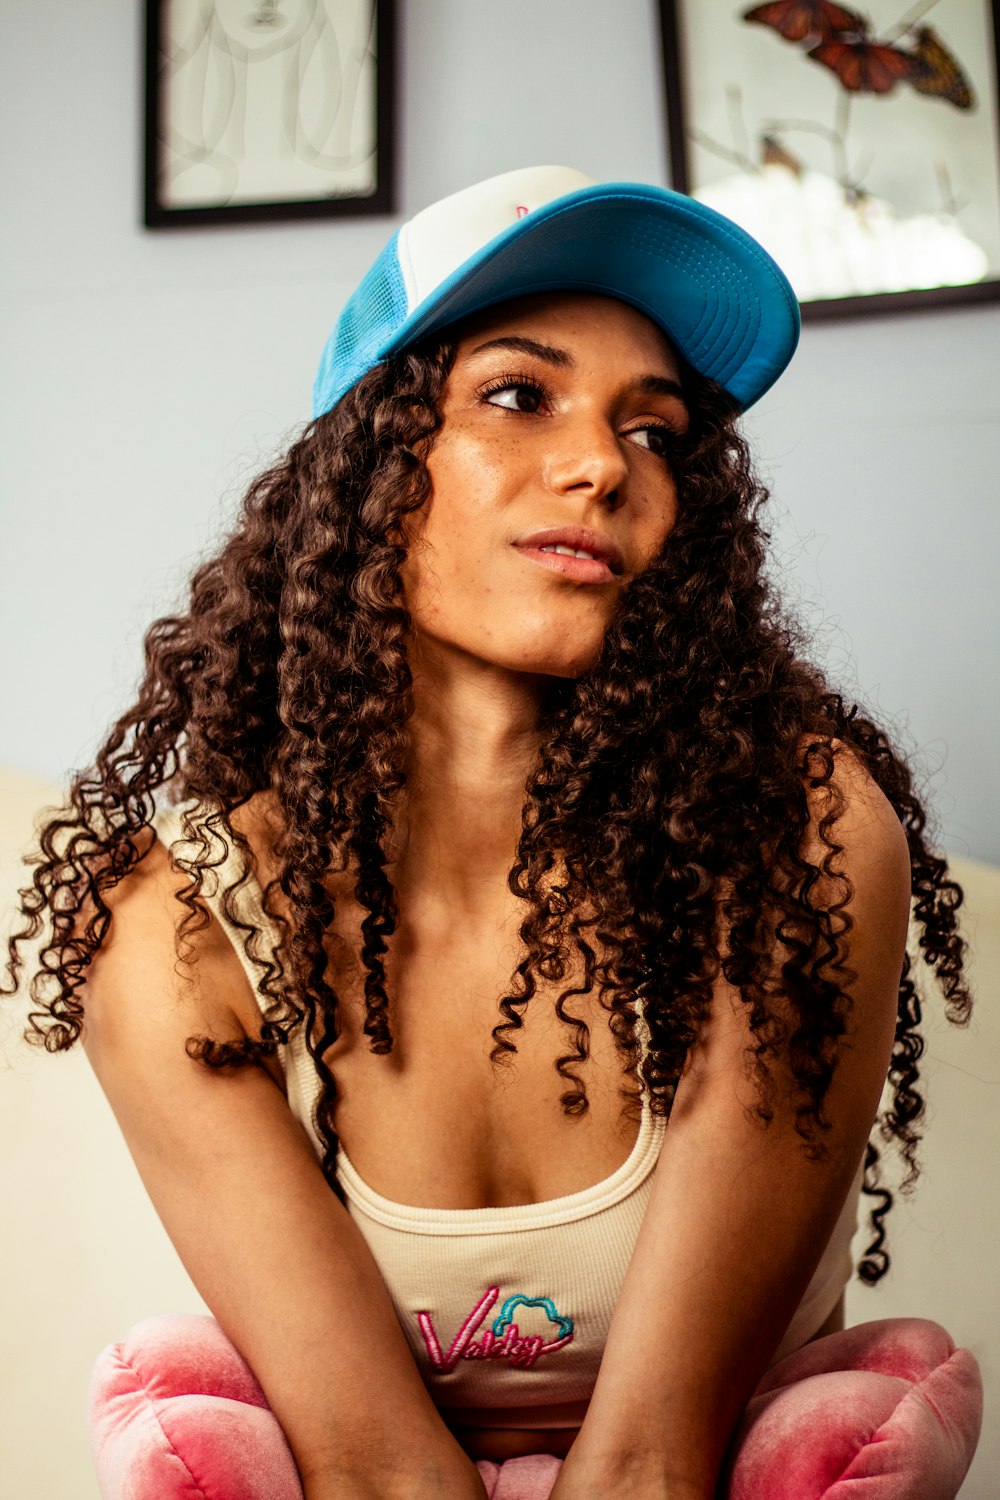 woman in white tank top wearing blue cap